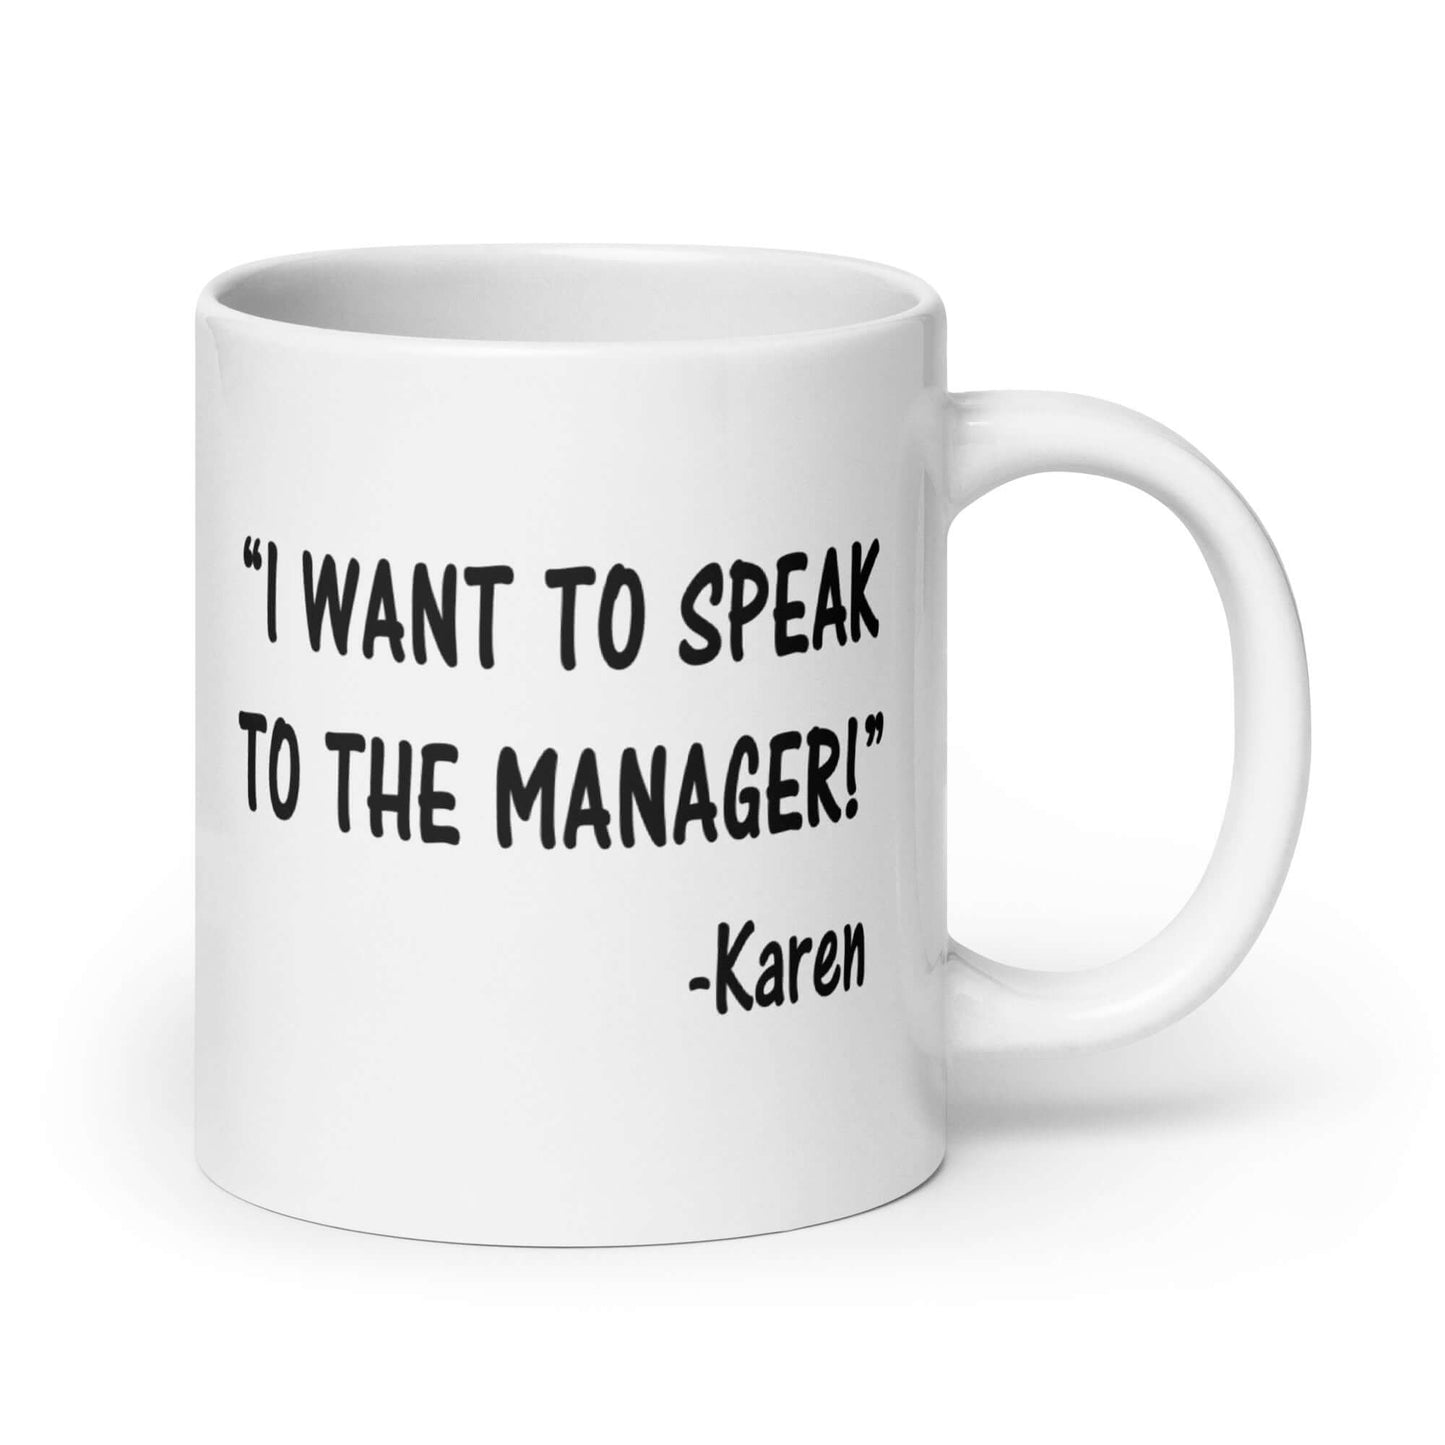 Karen quote coffee mug. I want to speak the the manager joke.